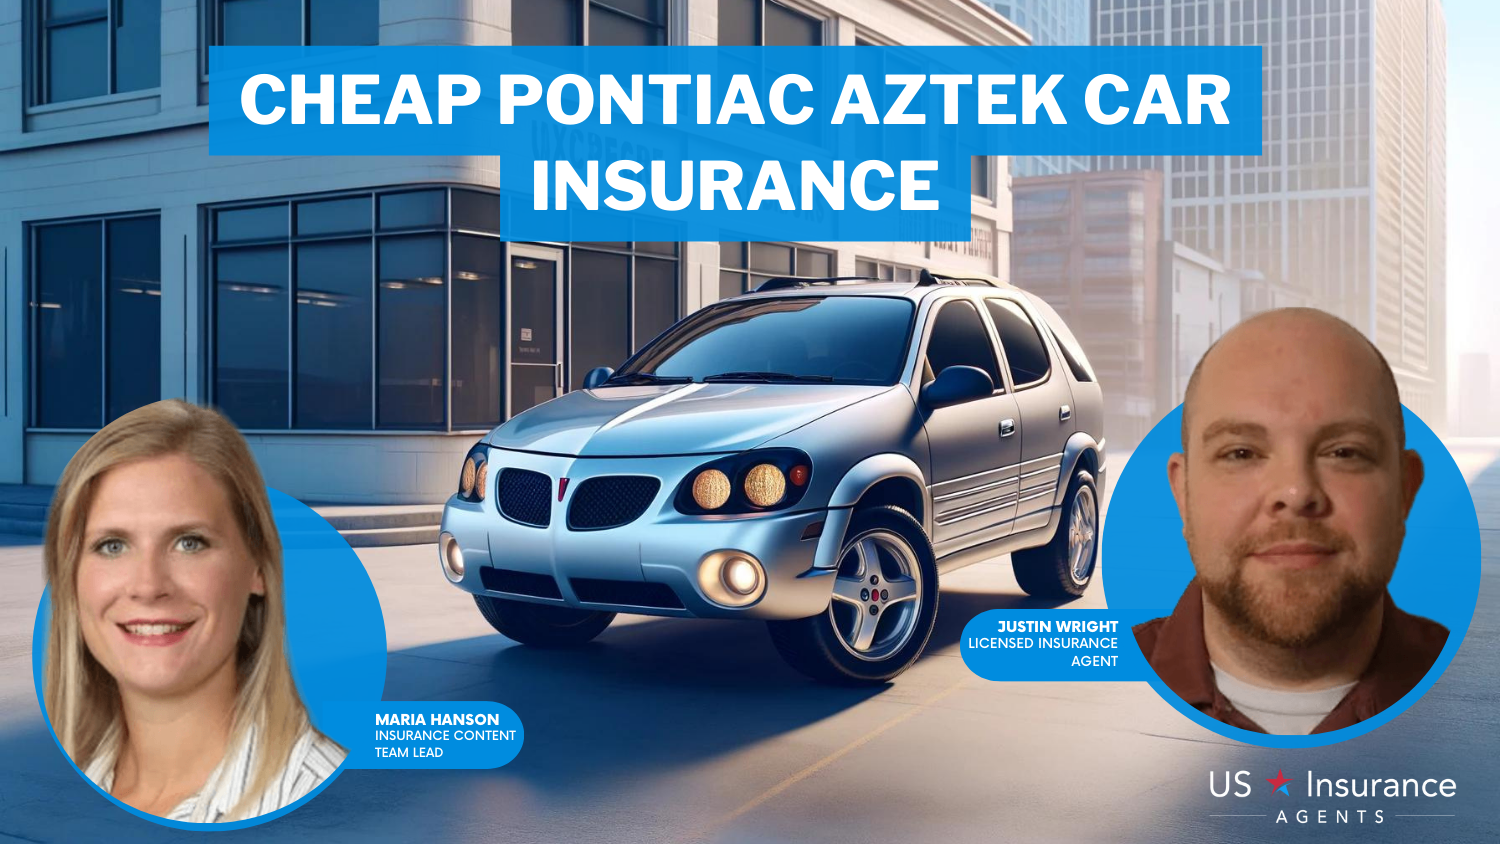 Metromile, USAA and Erie: Cheap Pontiac Aztek Car Insurance